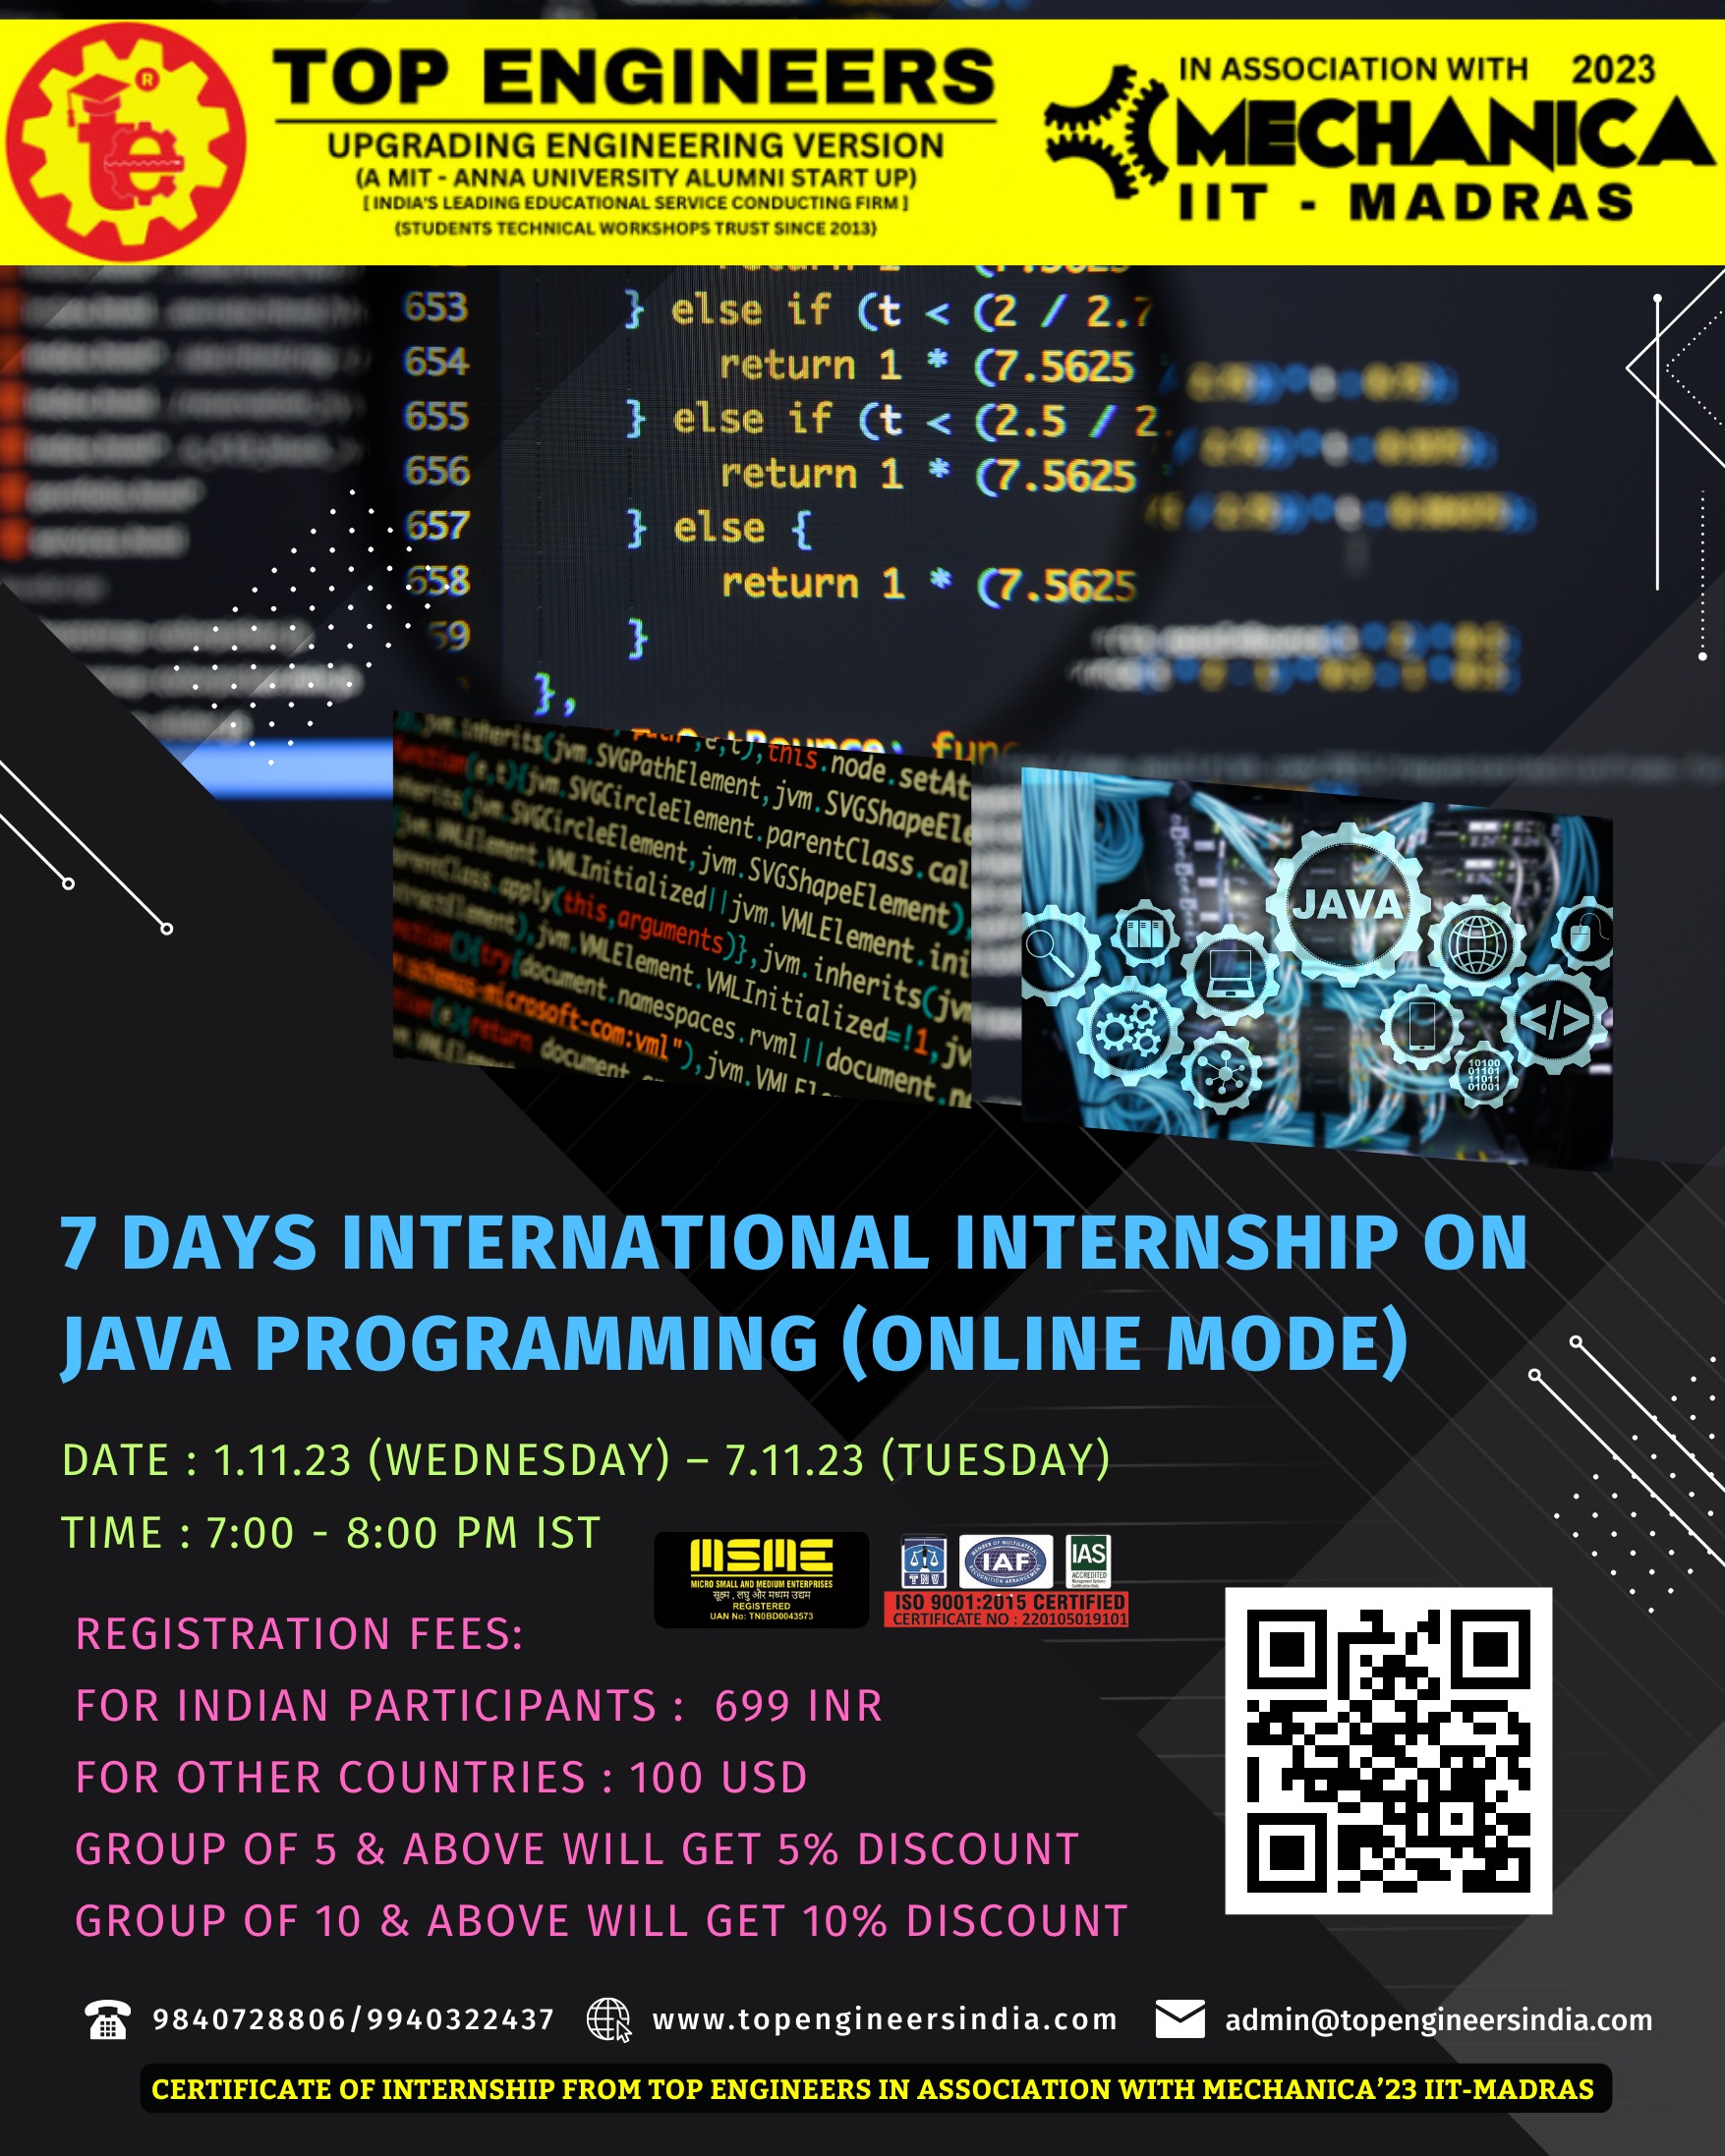 7 Days International Internship on Java Programming 2023